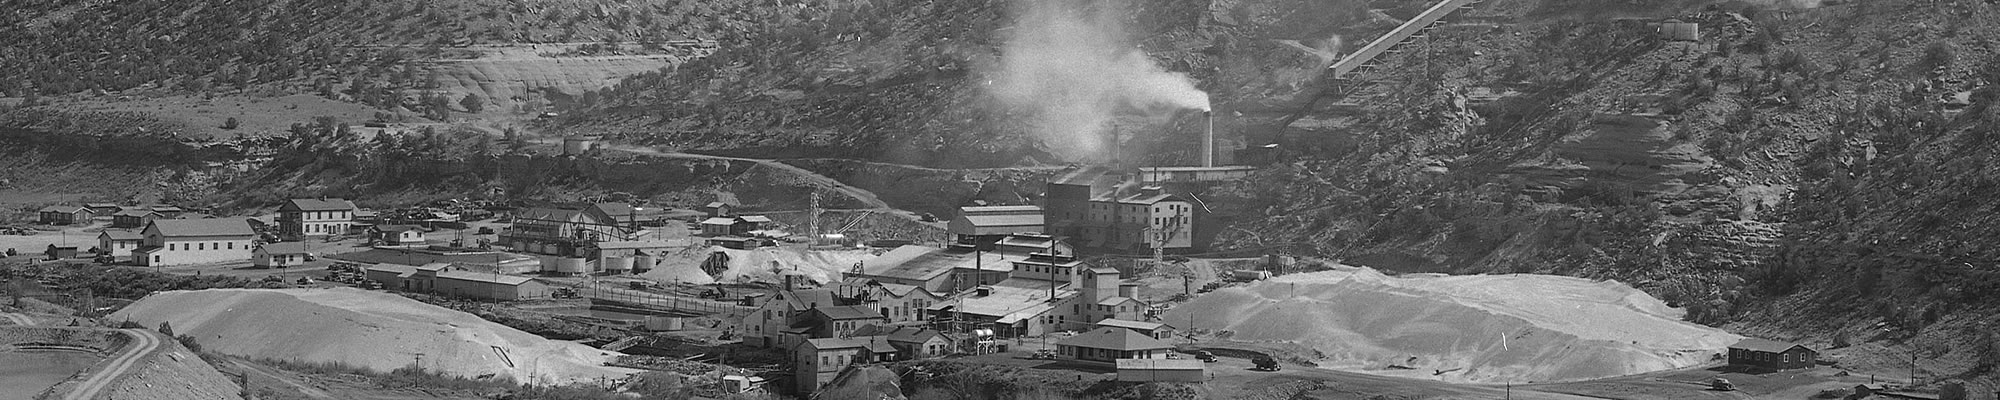 Uranium Mining History - Uranium Mill